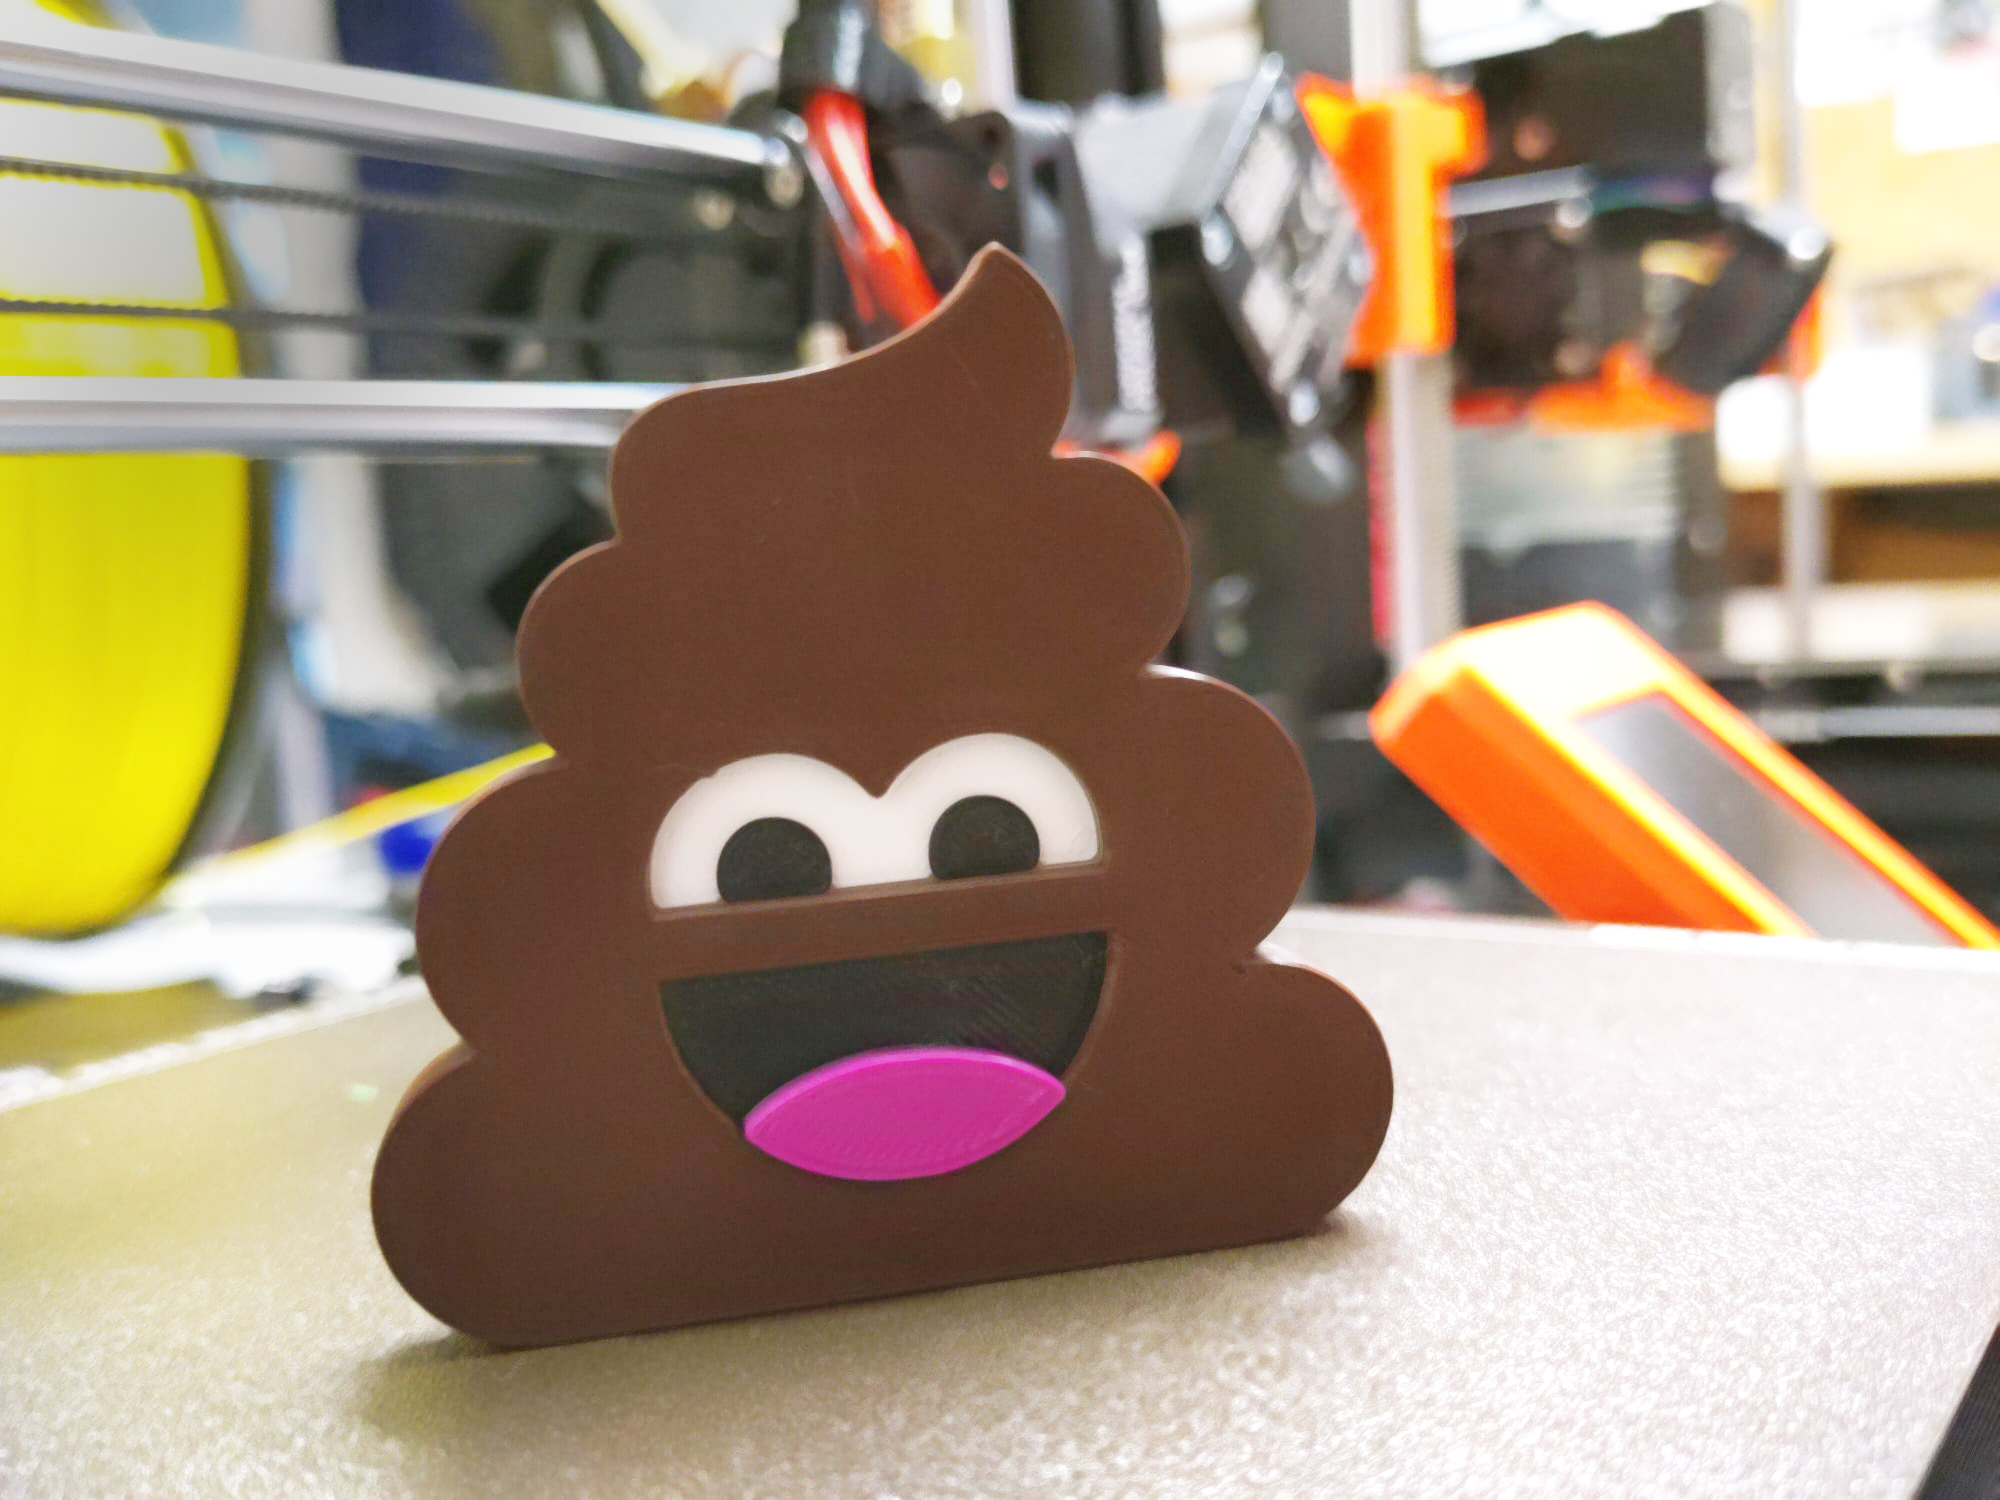 The "Pile of Poo" emoji 3d badge